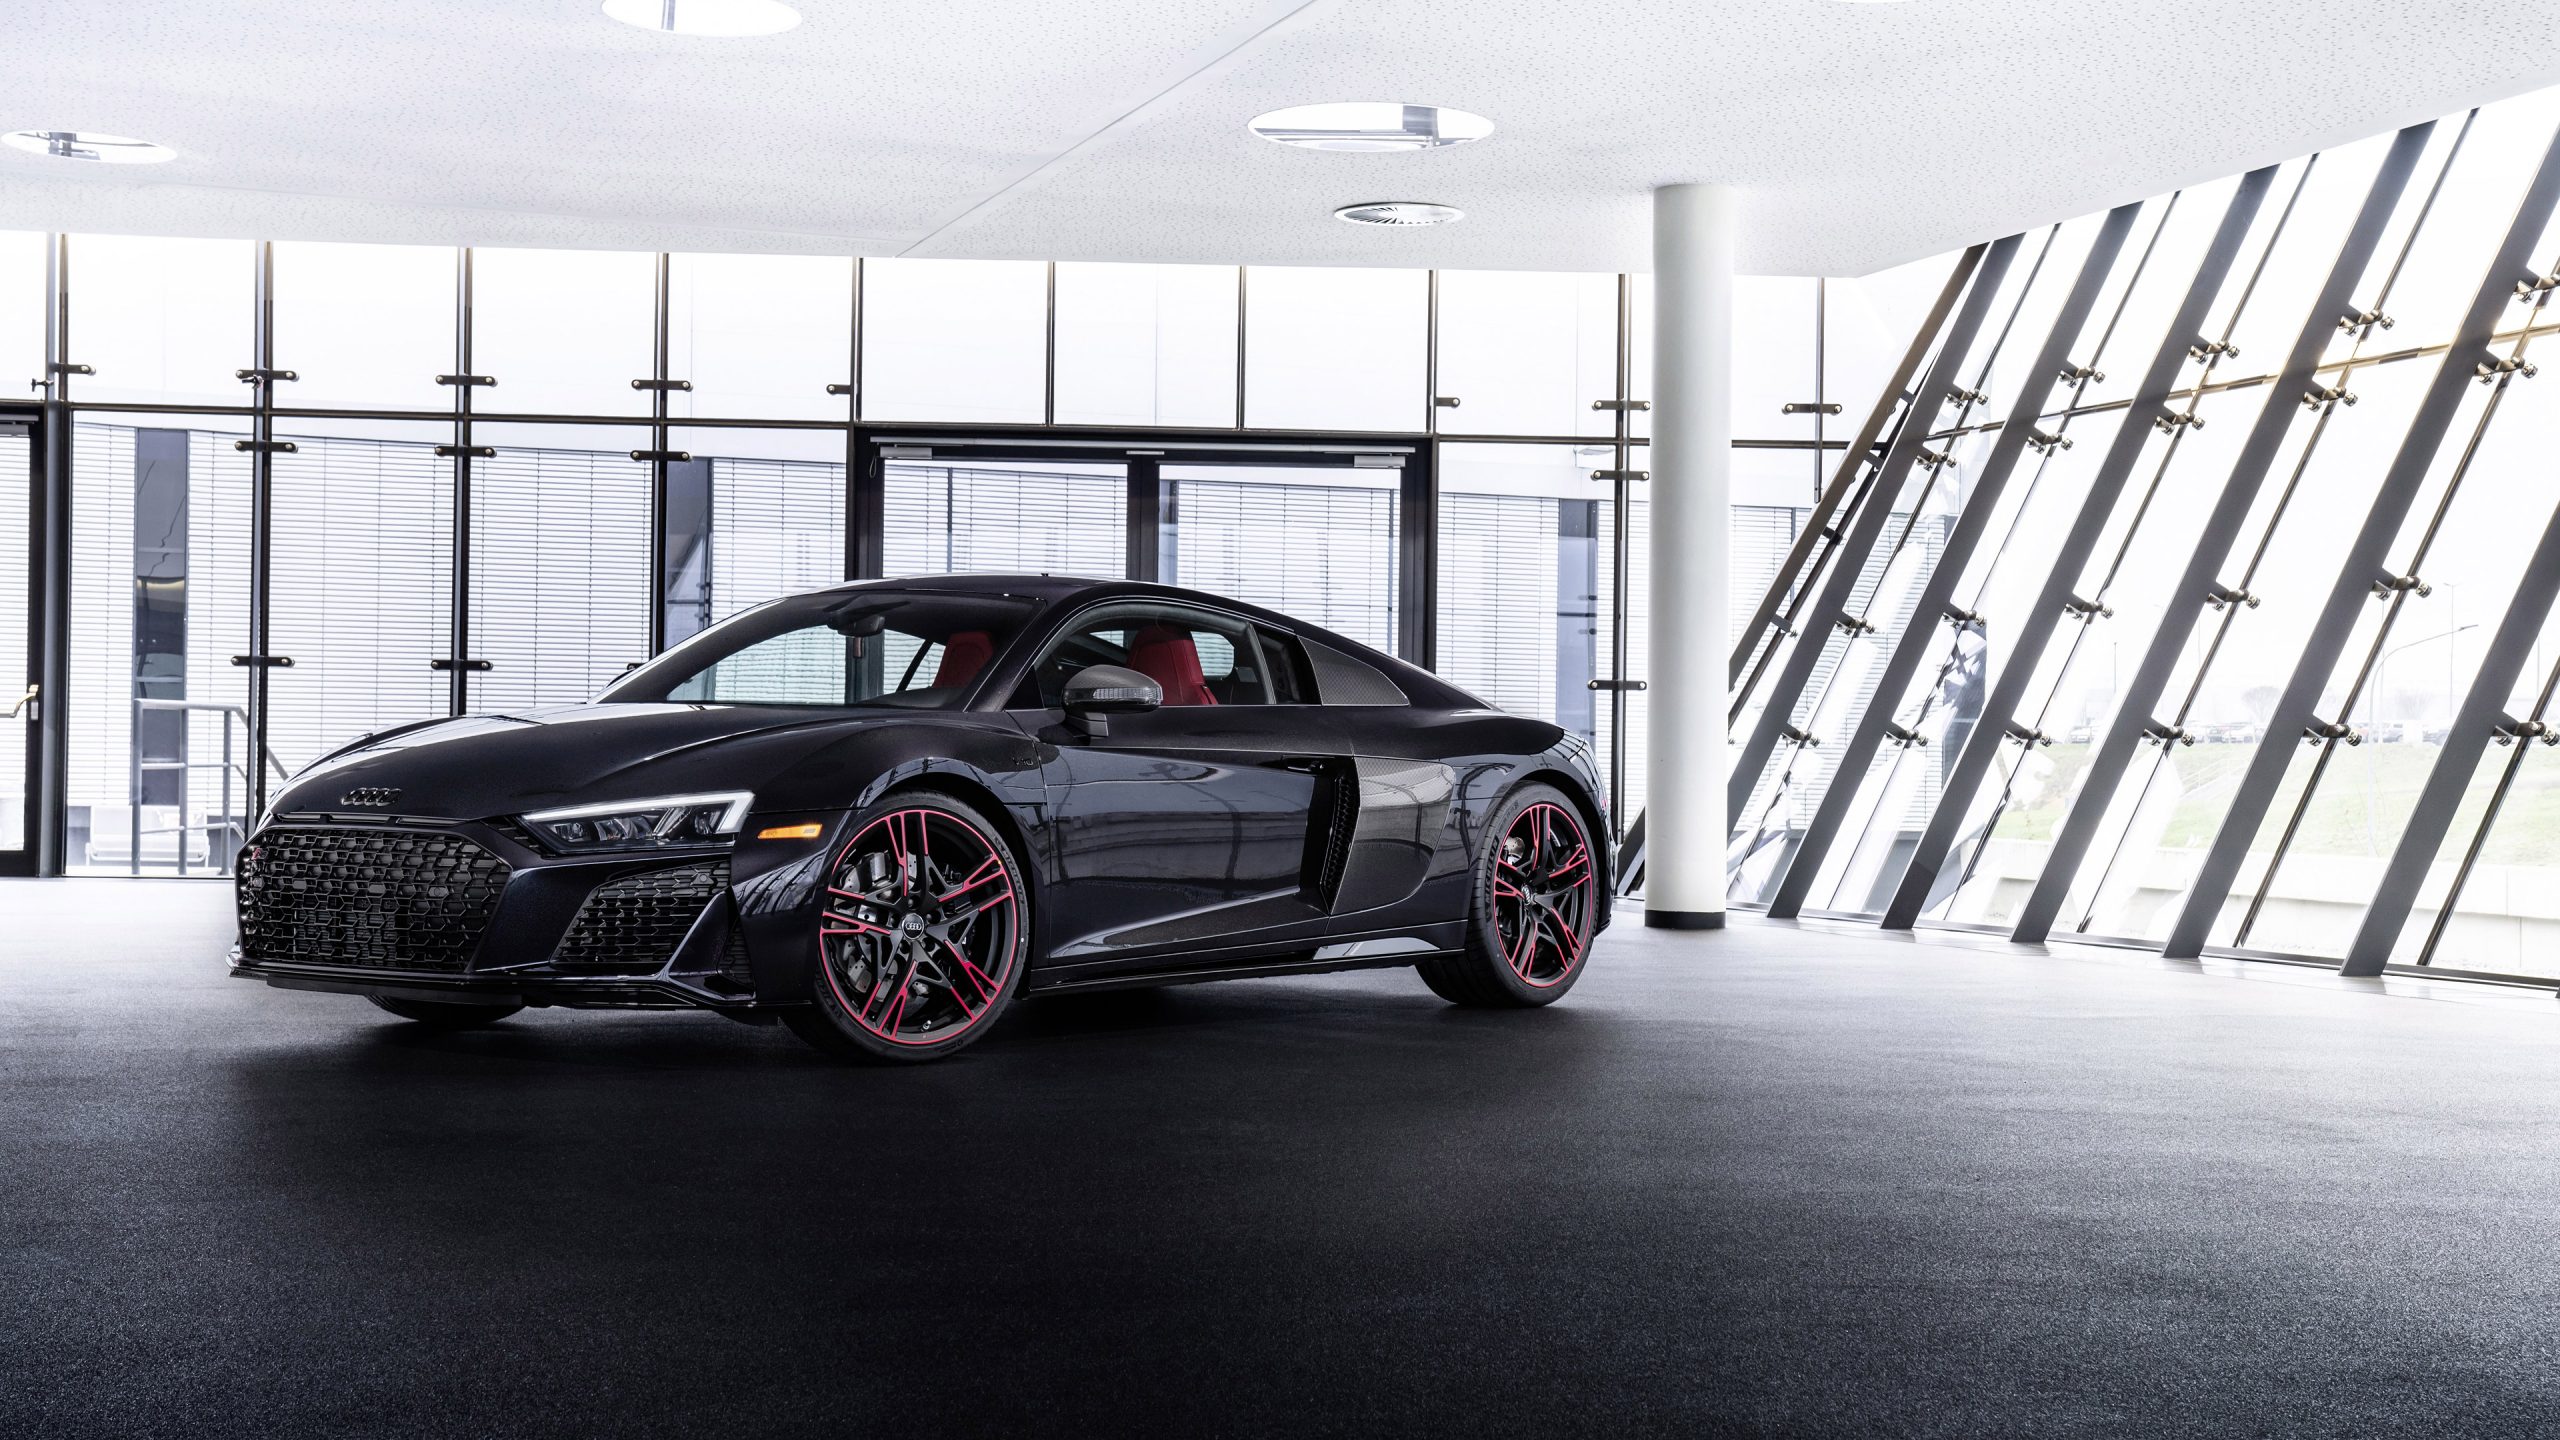 Audi R8 Hd Wallpapers